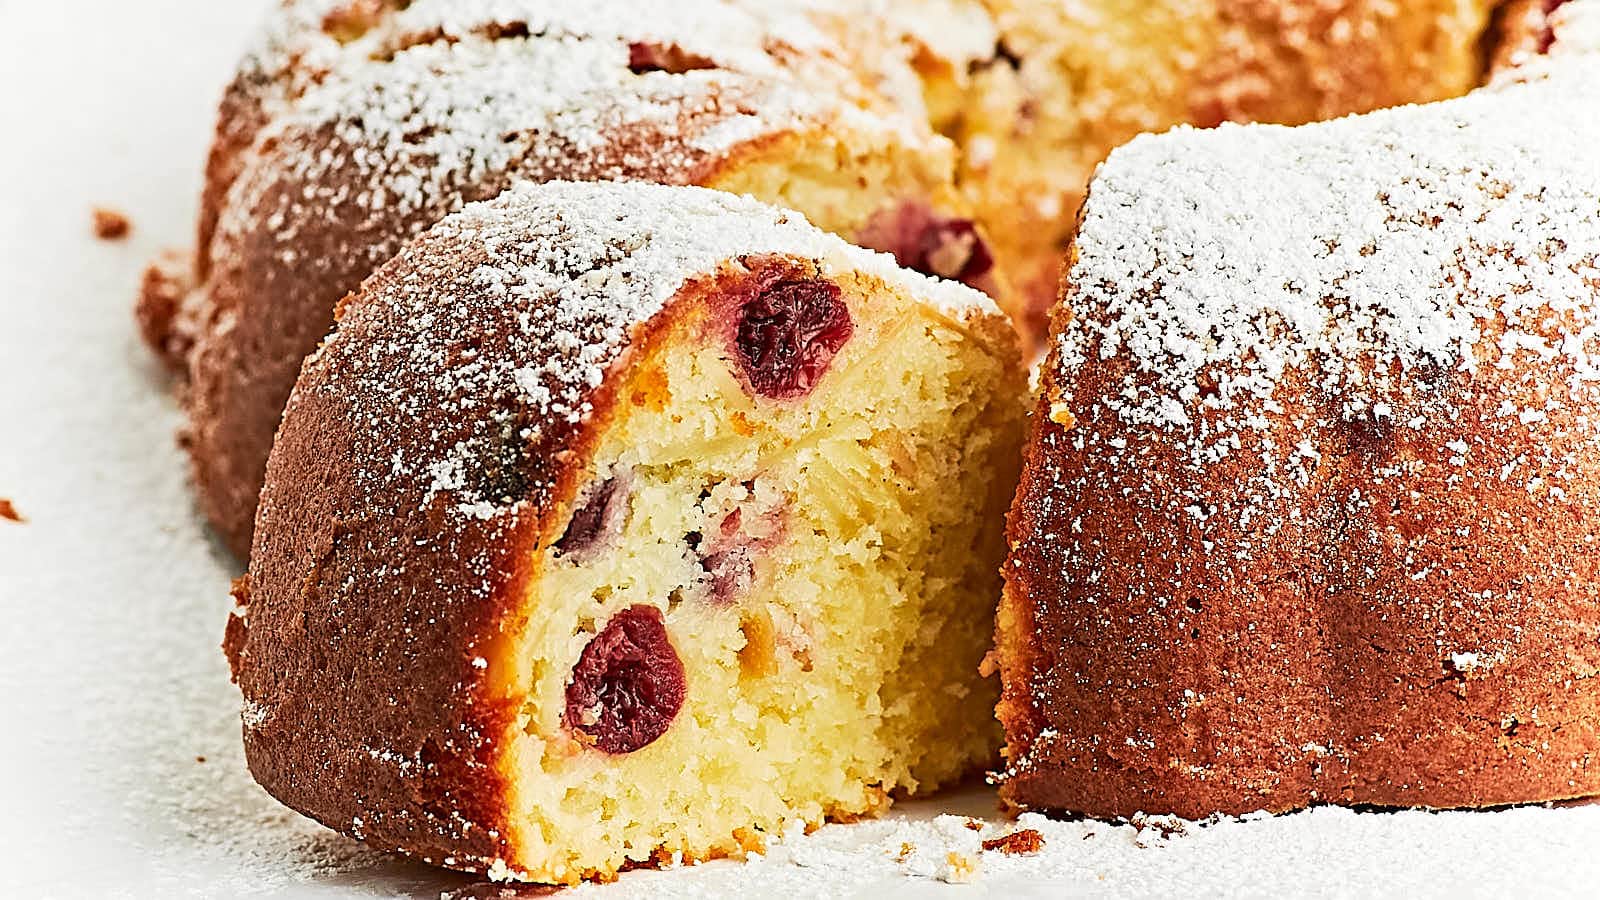 German Cherry Bundt Cake recipe by Cheerful Cook.